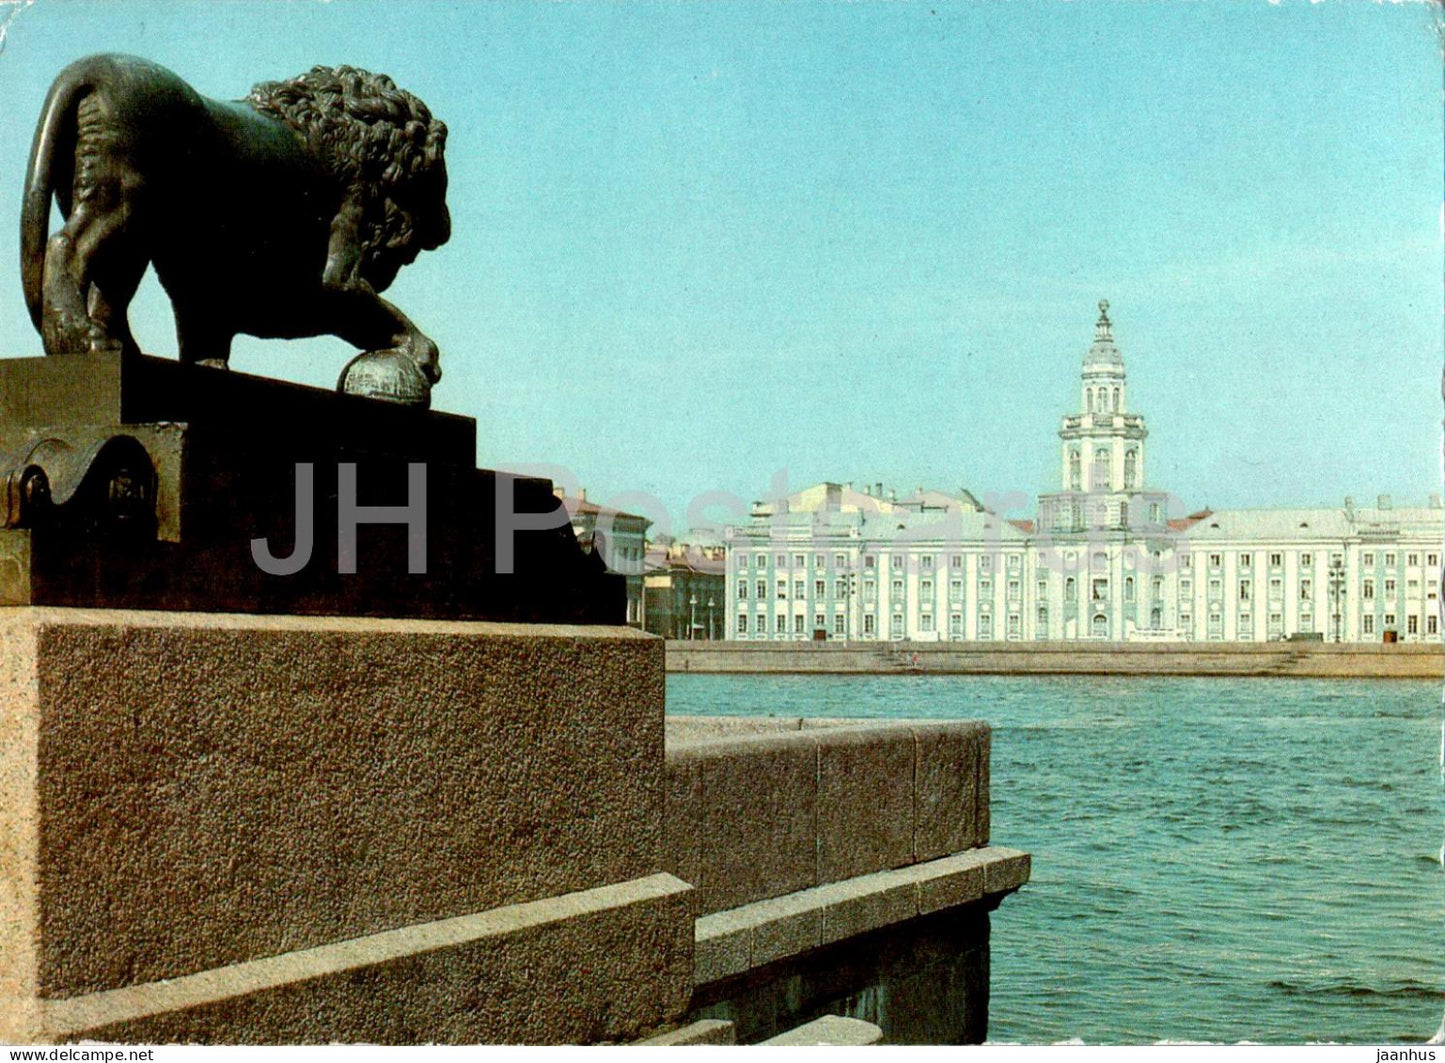 Leningrad - St Petersburg - A view of the Kunstkamera - museum of natural history - Aeroflot - Russia USSR - unused - JH Postcards